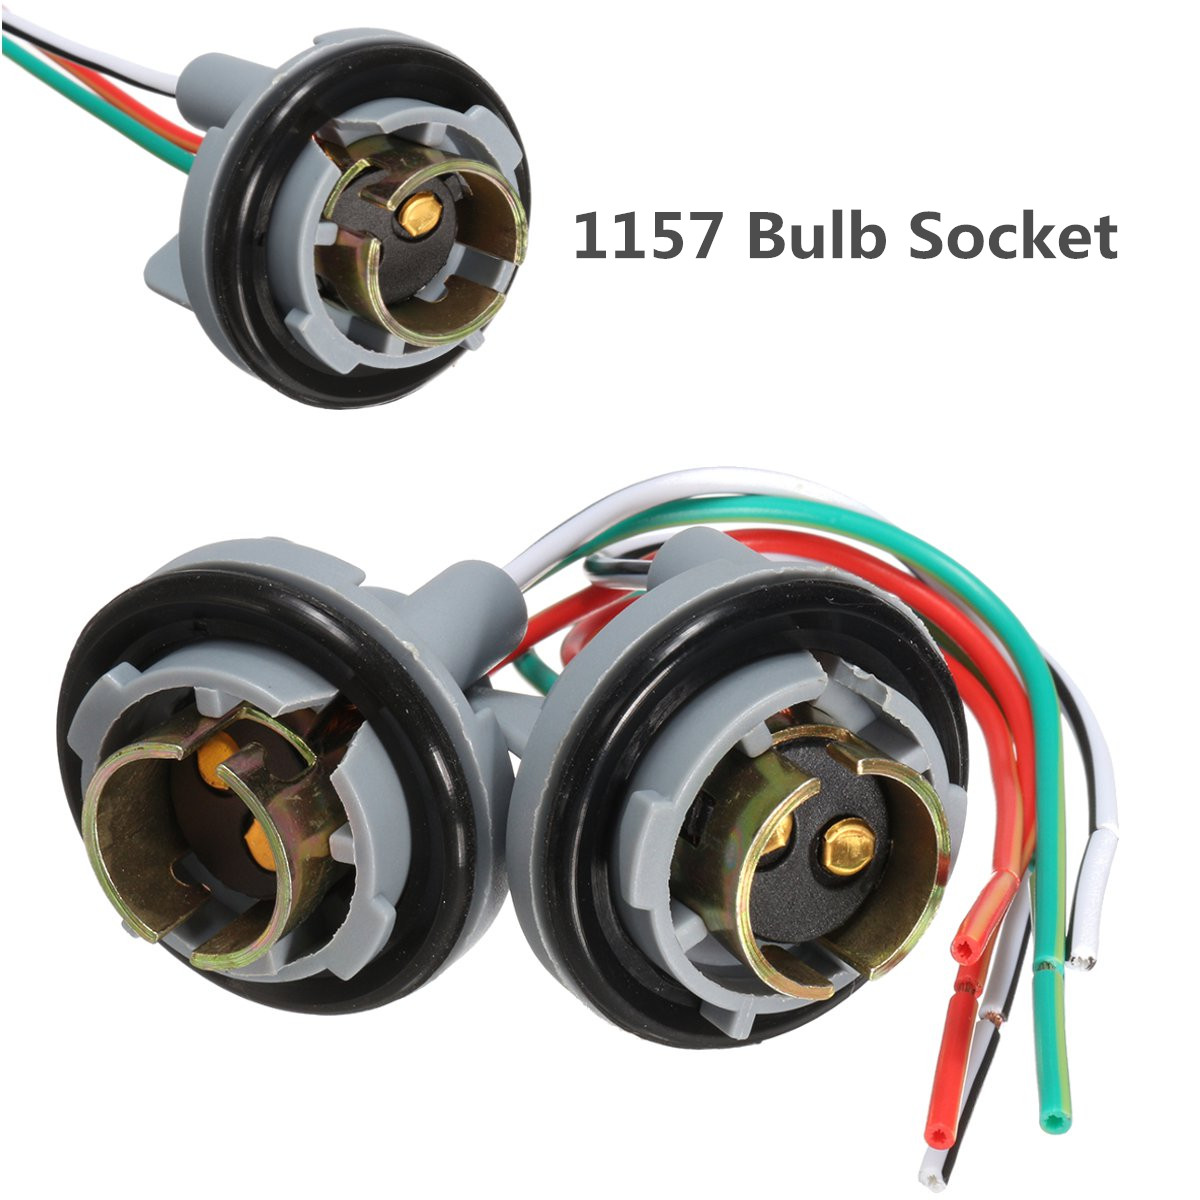 2Pcs-Turn-Light-Brake-LED-Bulb-Socket-Connector-Wire-Harness-for-1157-BAY15d-1398435-2